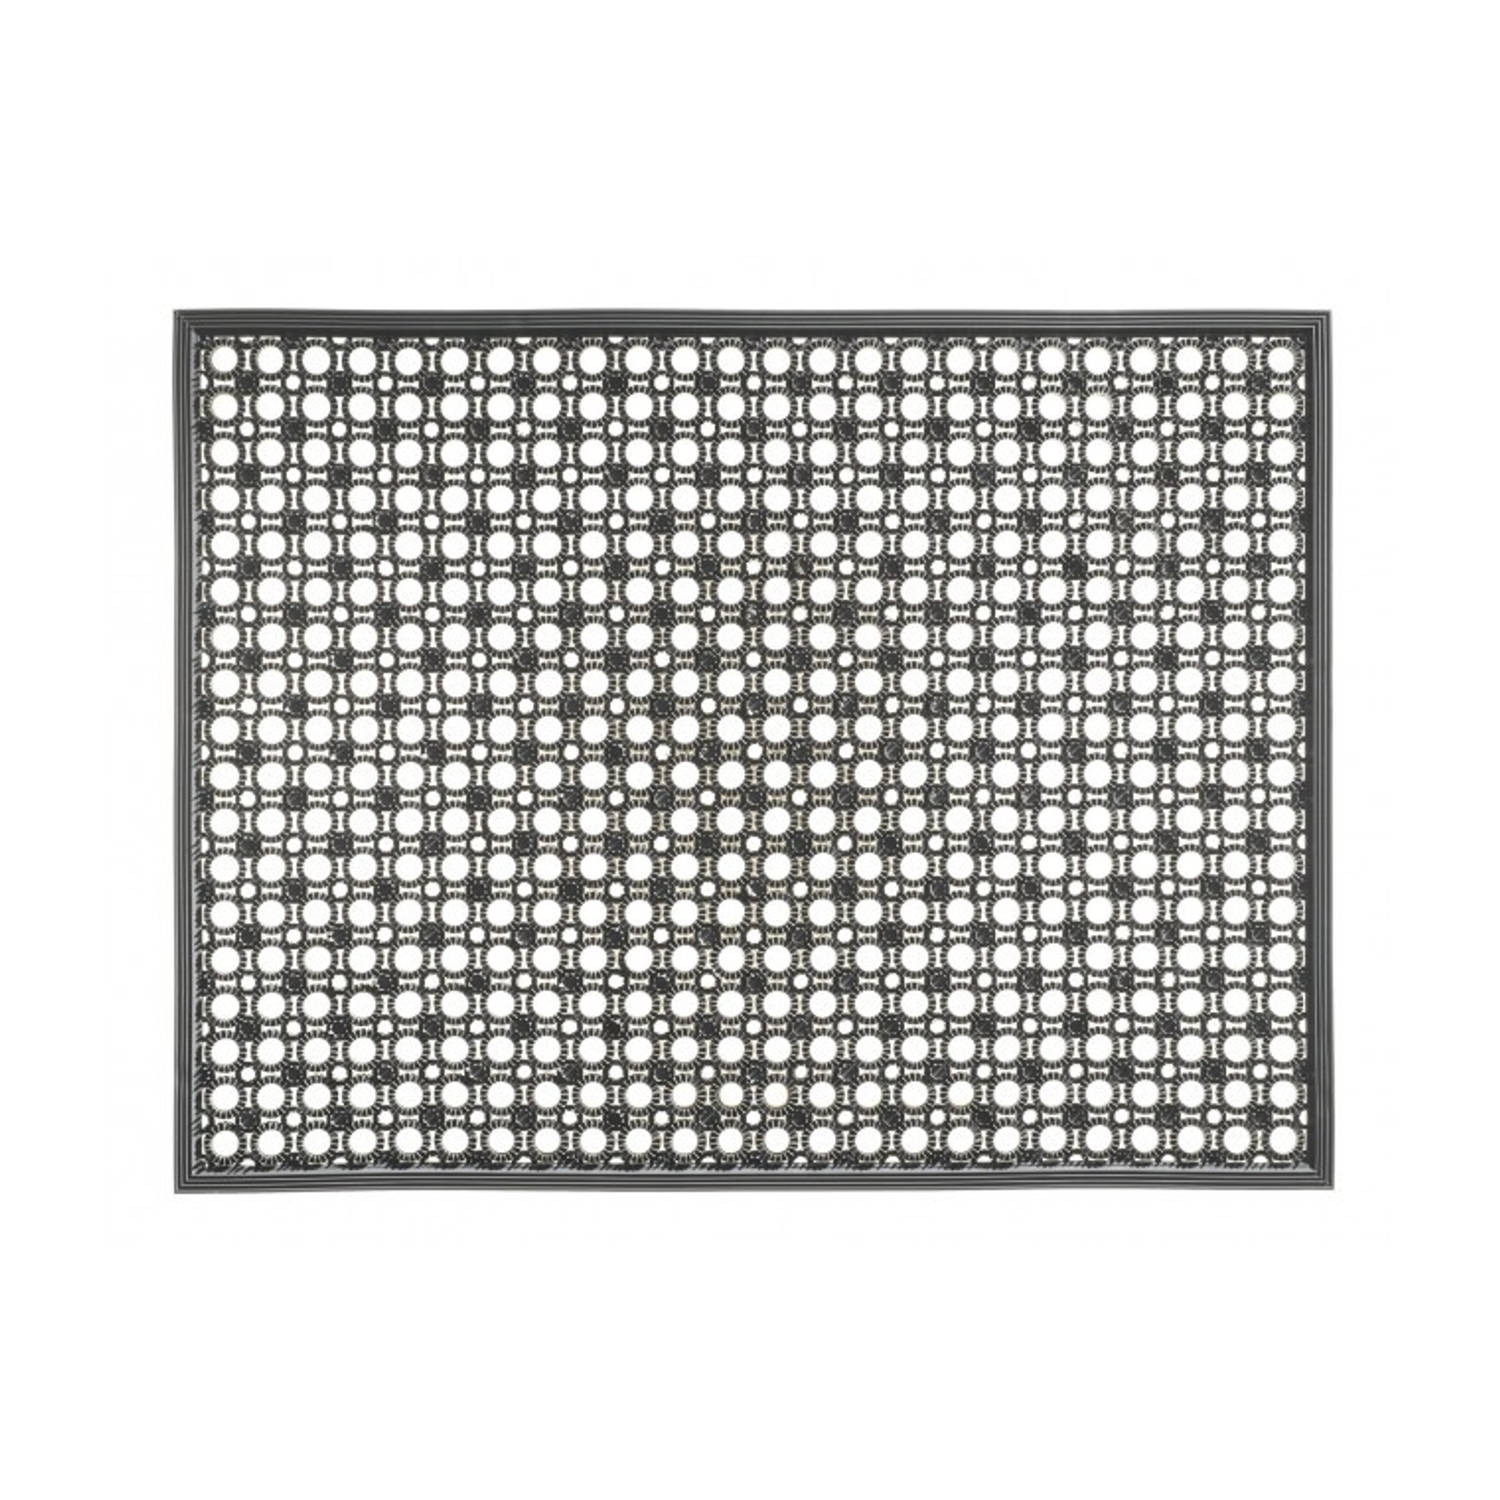 Buitenmat lizzy grijs 48x62 cm